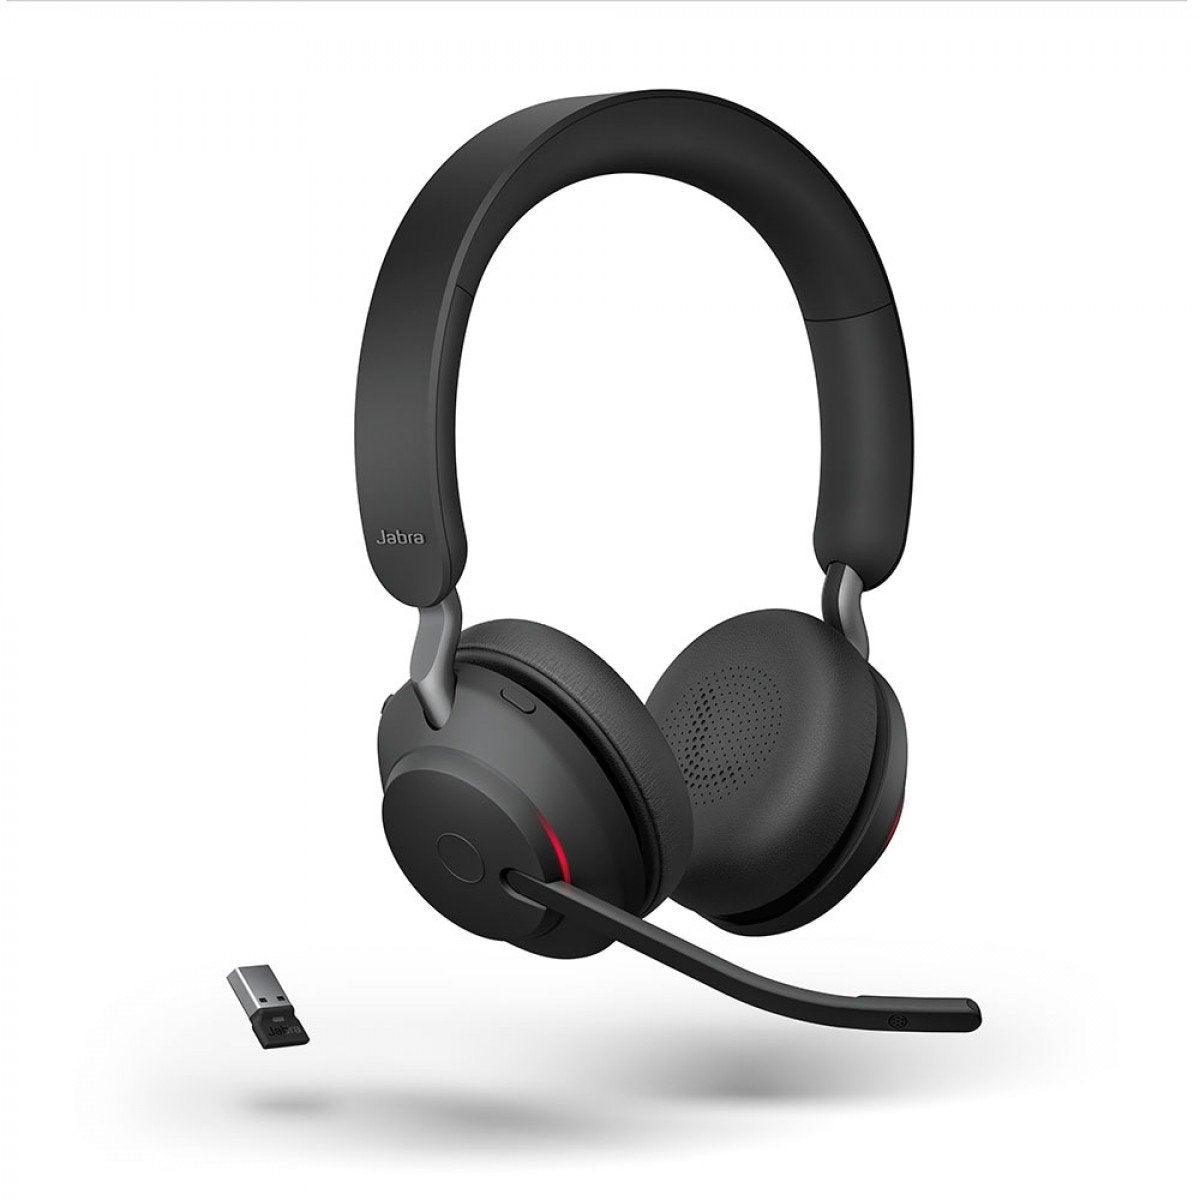 Avaya 9611G Evolve2 65 Advanced Bluetooth Headset - Headsets4business